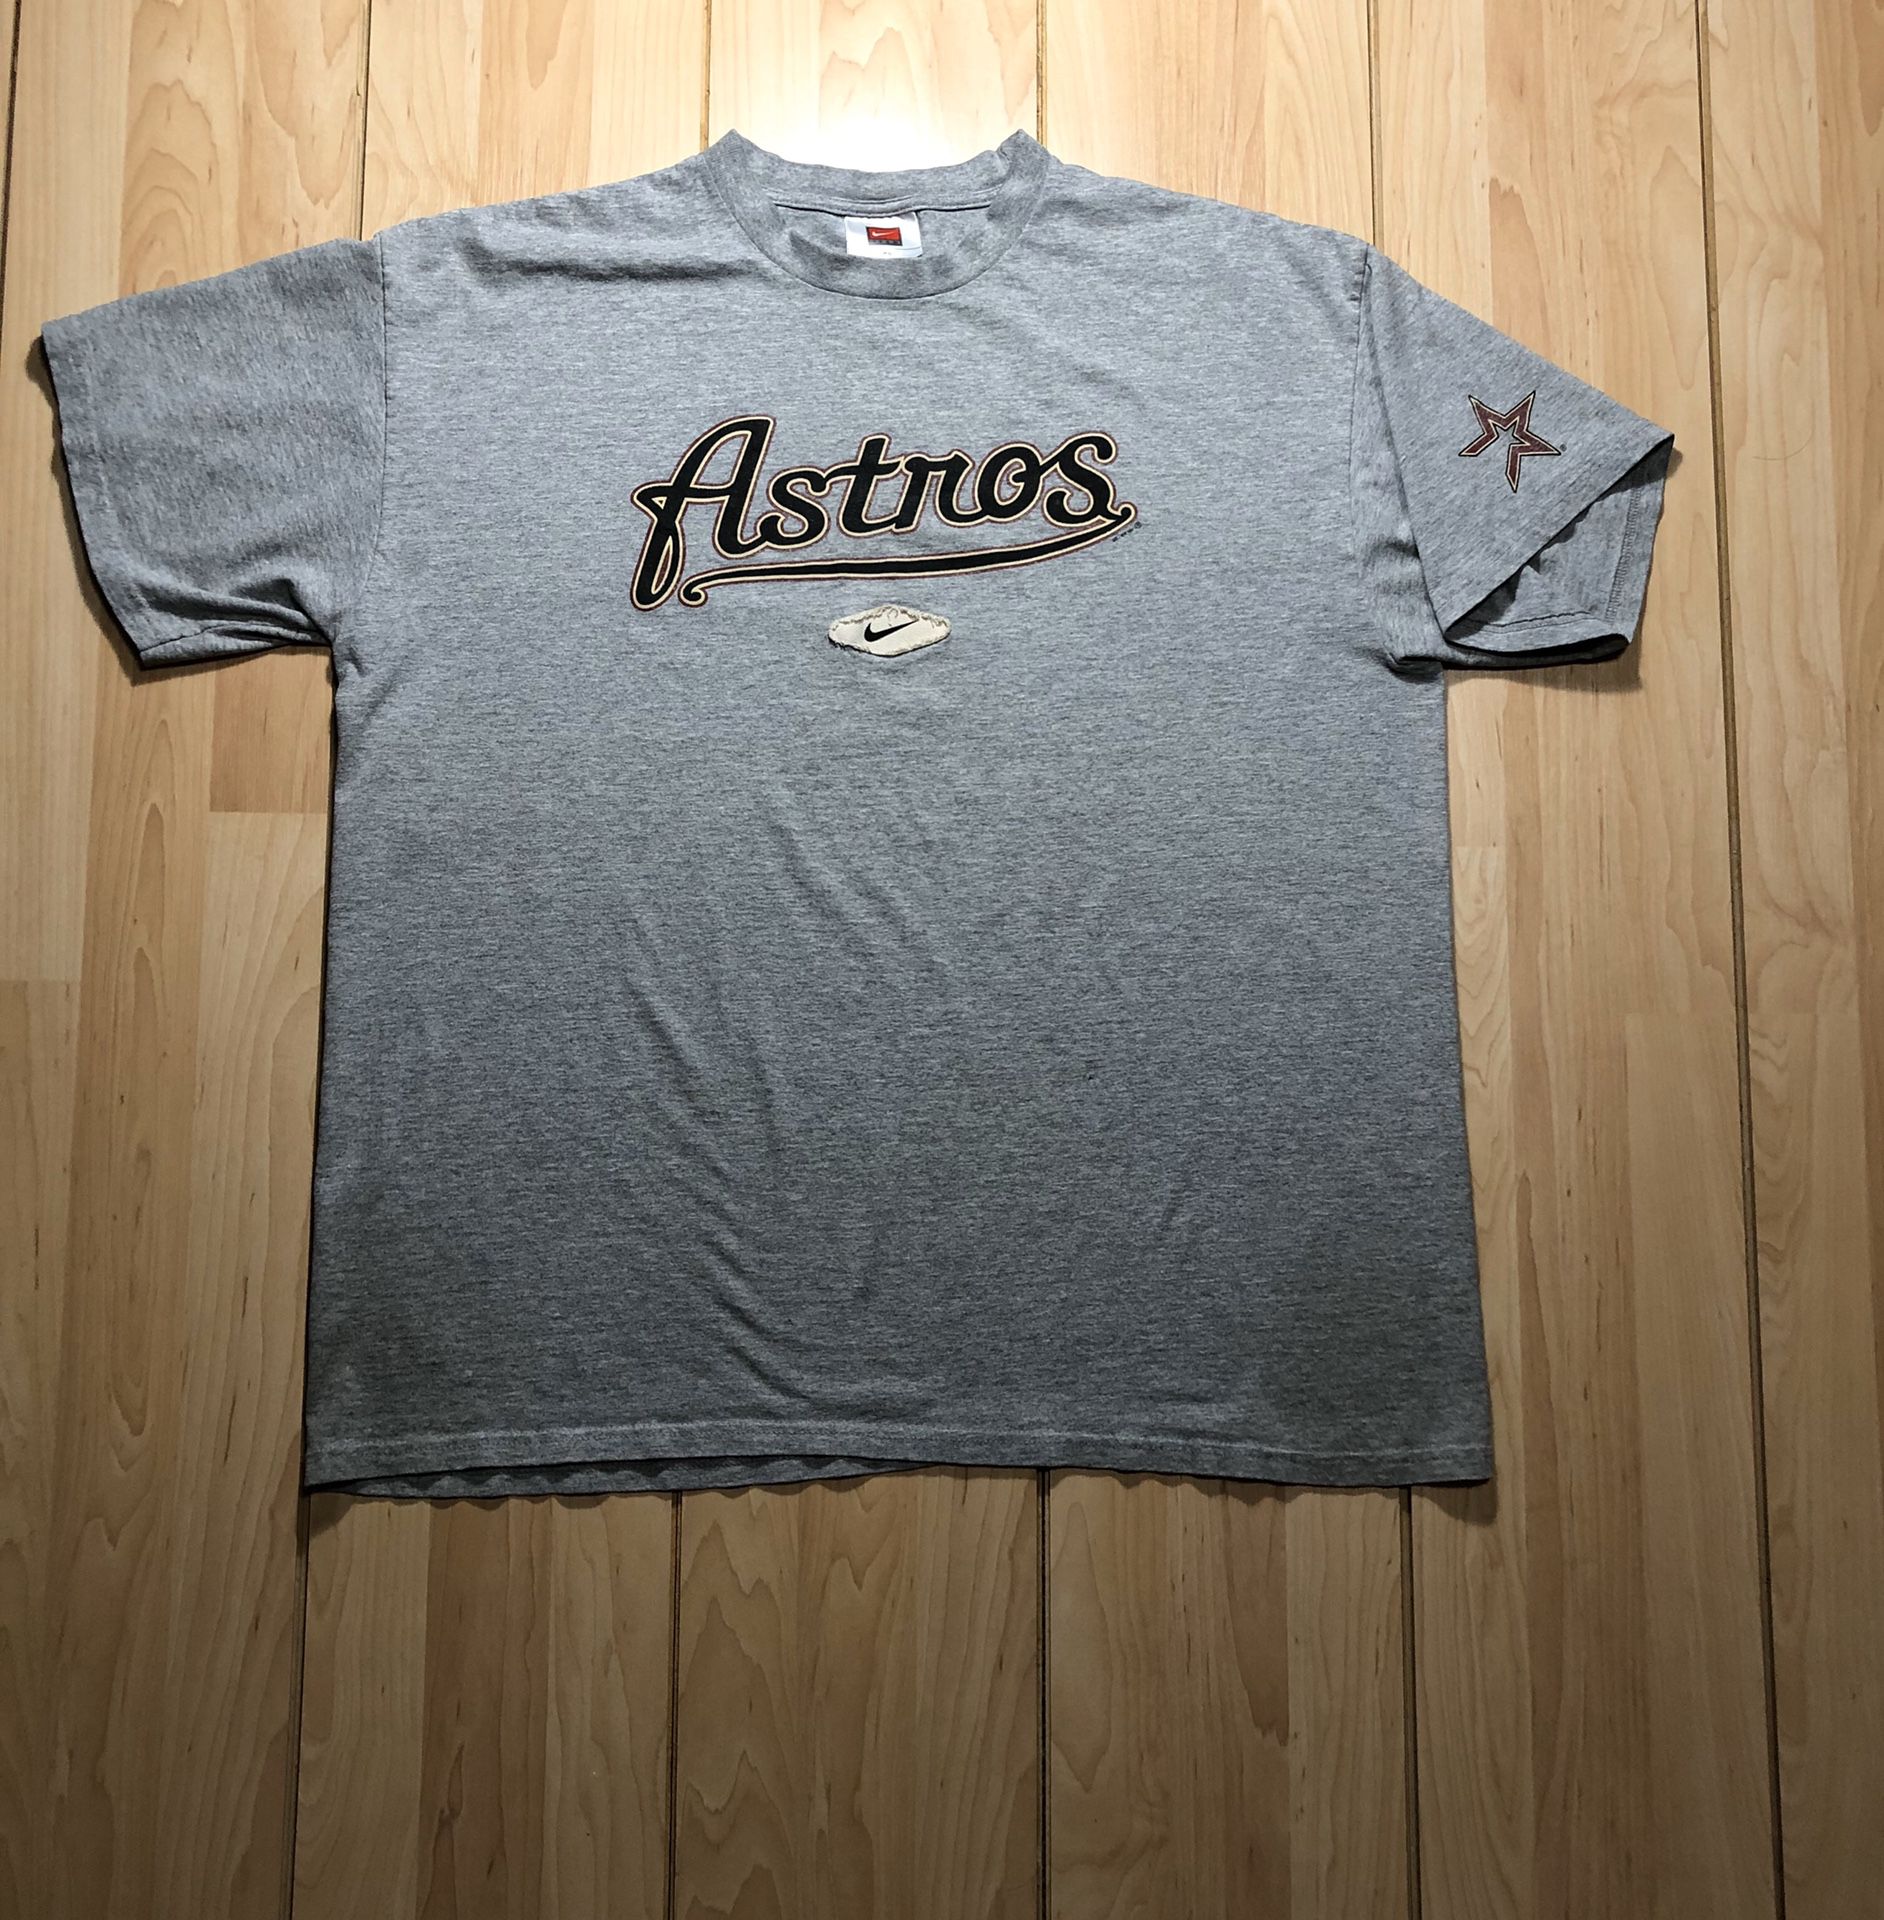 Vintage Nike Astros shirt